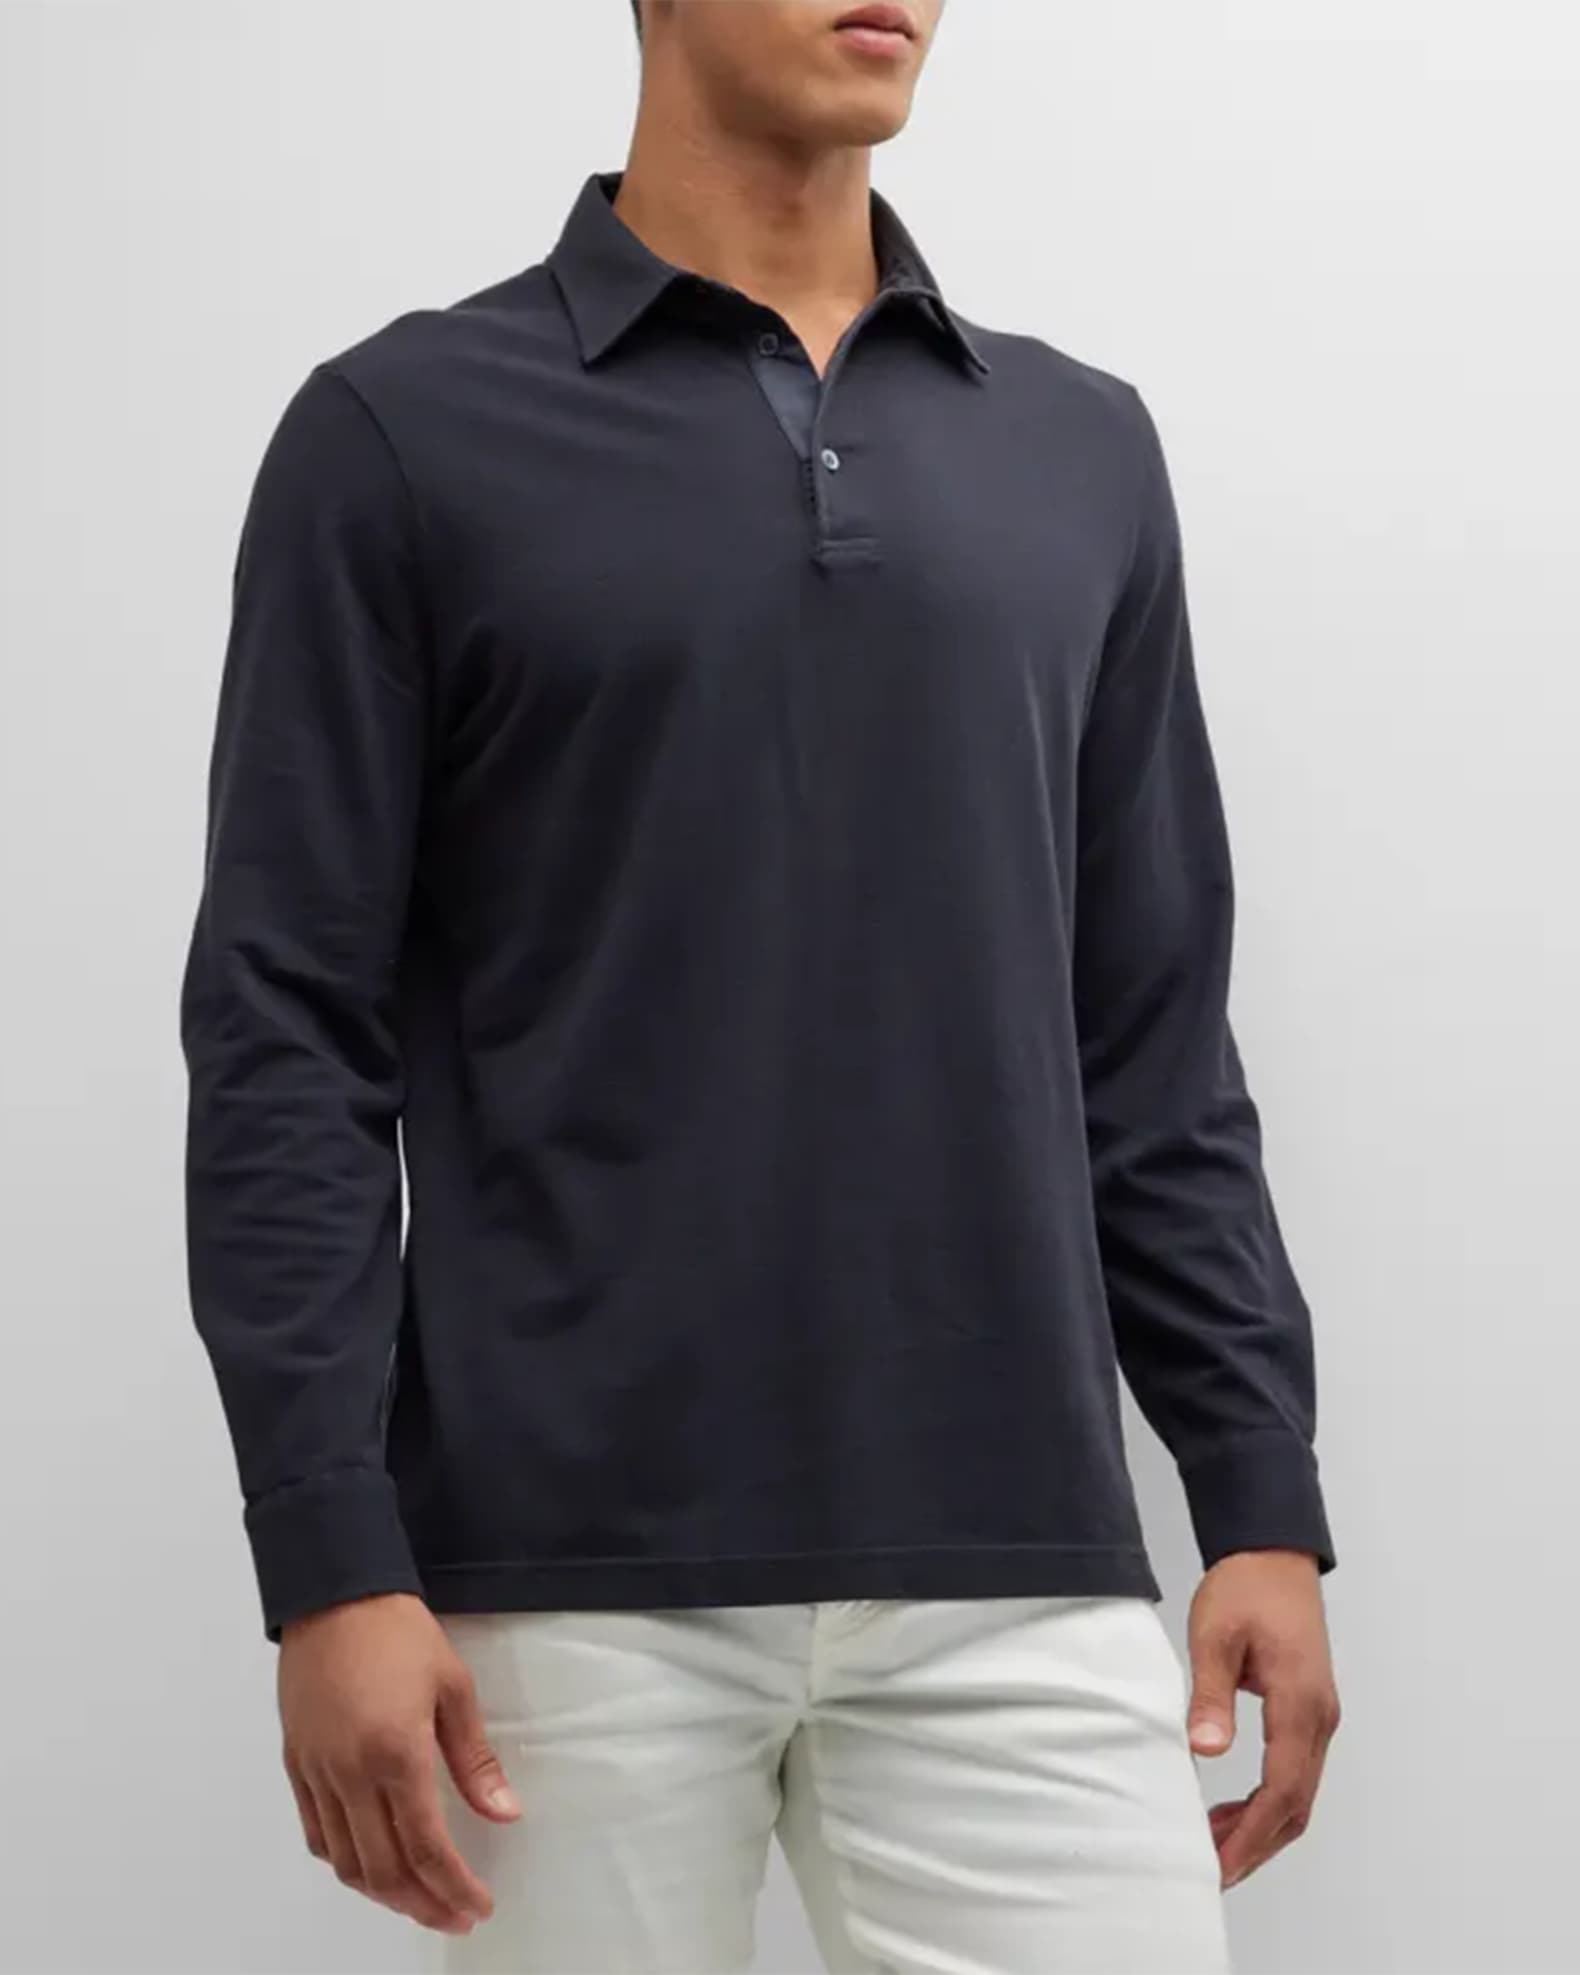 Louis Vuitton, Shirts, Navy Louis Vuitton X Supreme Couture Pajamas Set